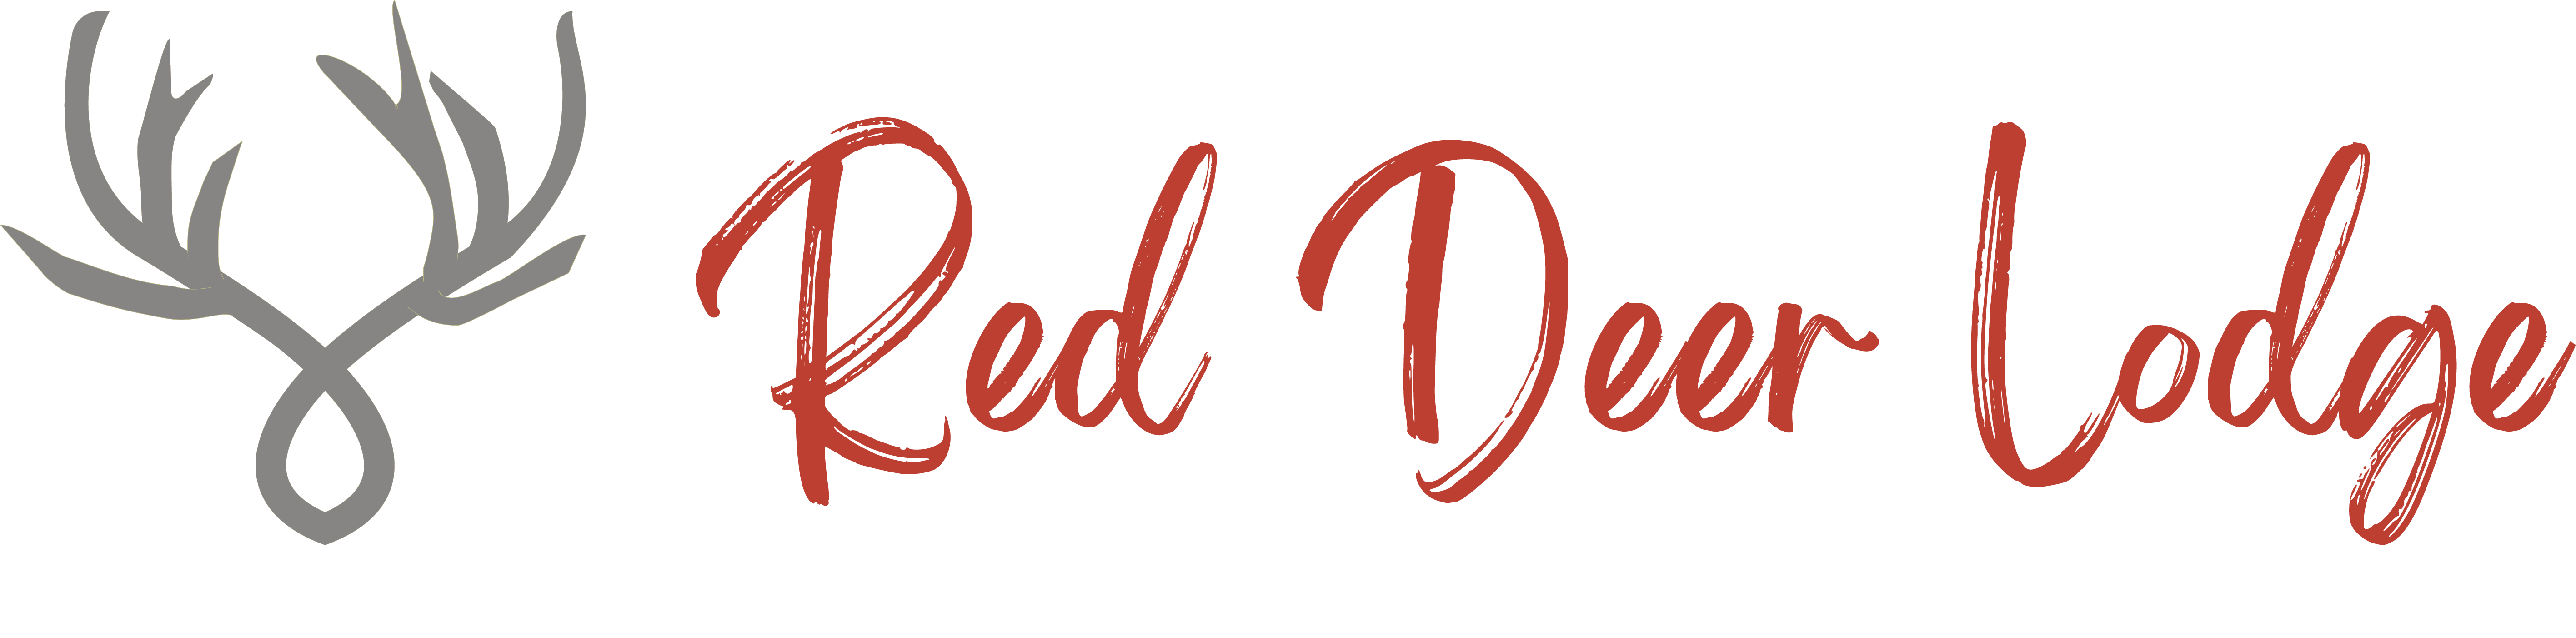 Red Deer Lodge Logo